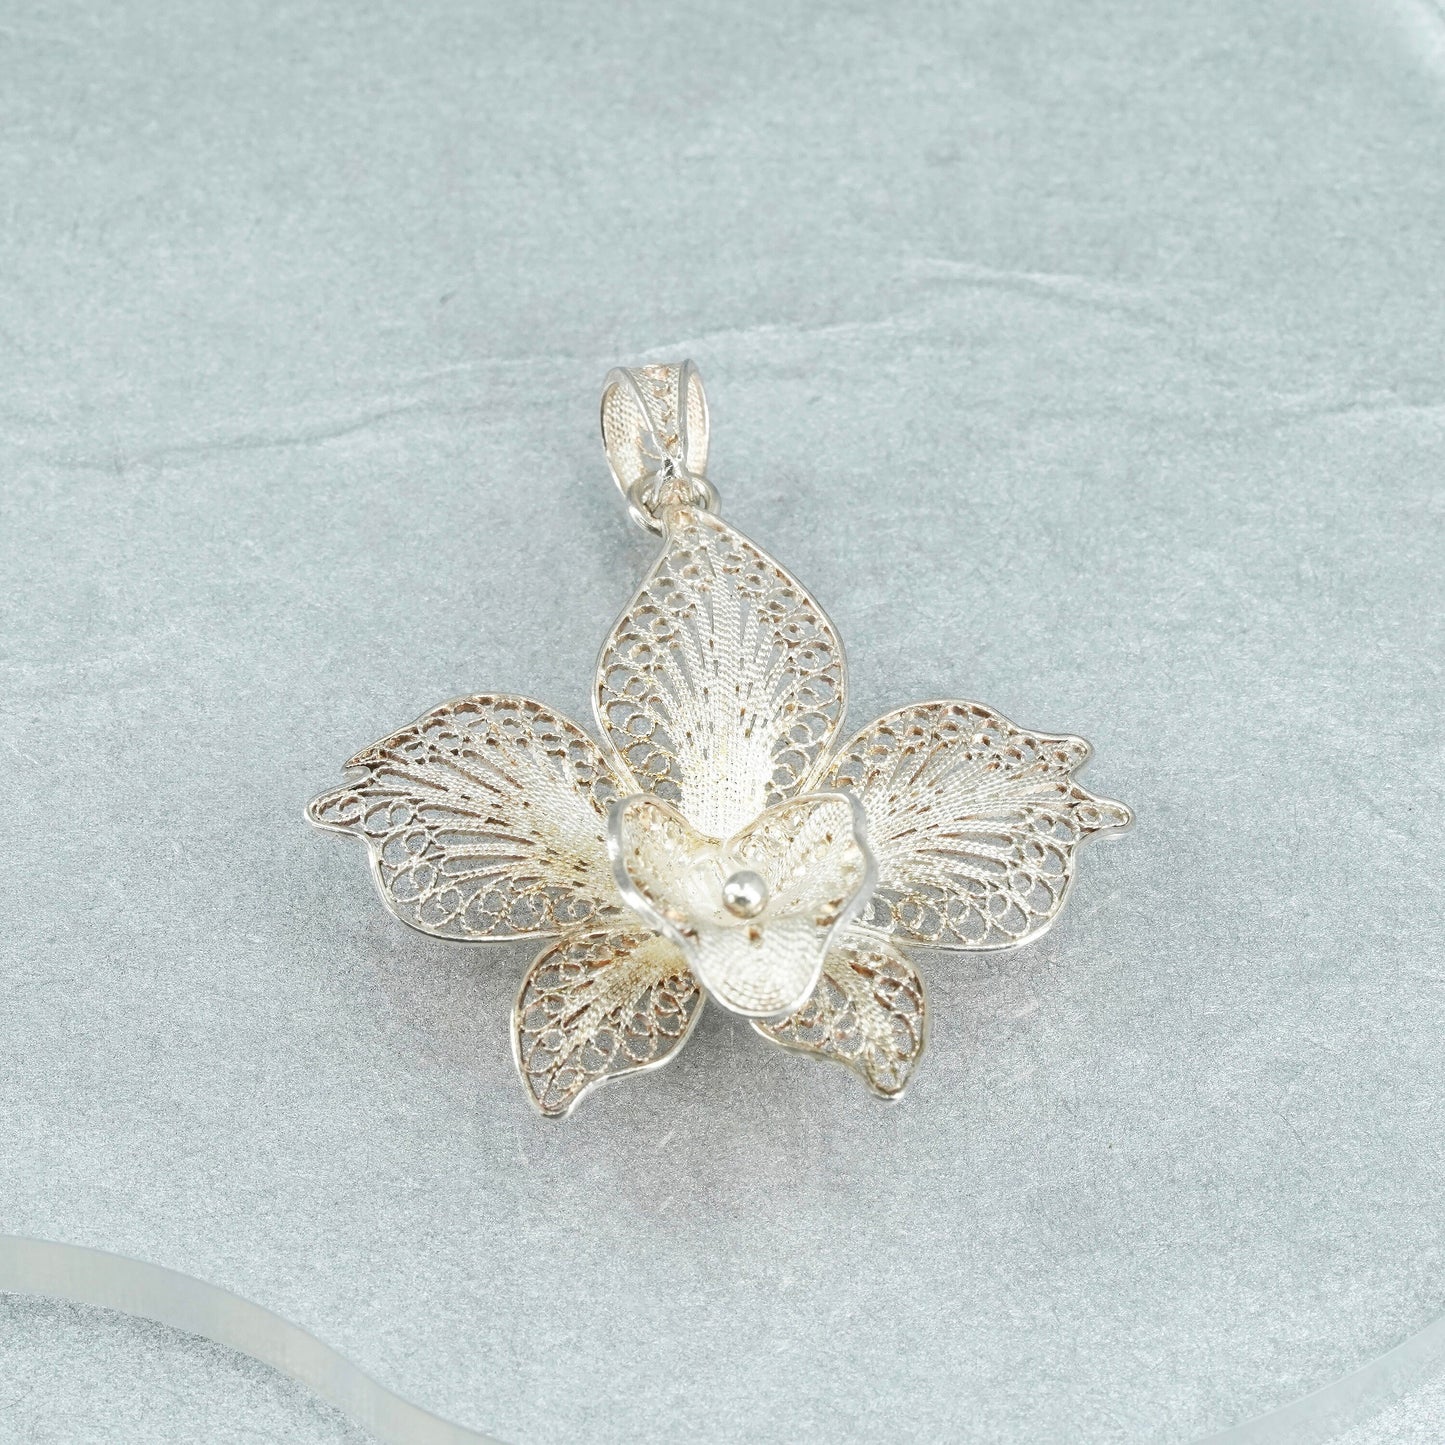 Vintage Sterling silver charm, 925 filigree flower pendant